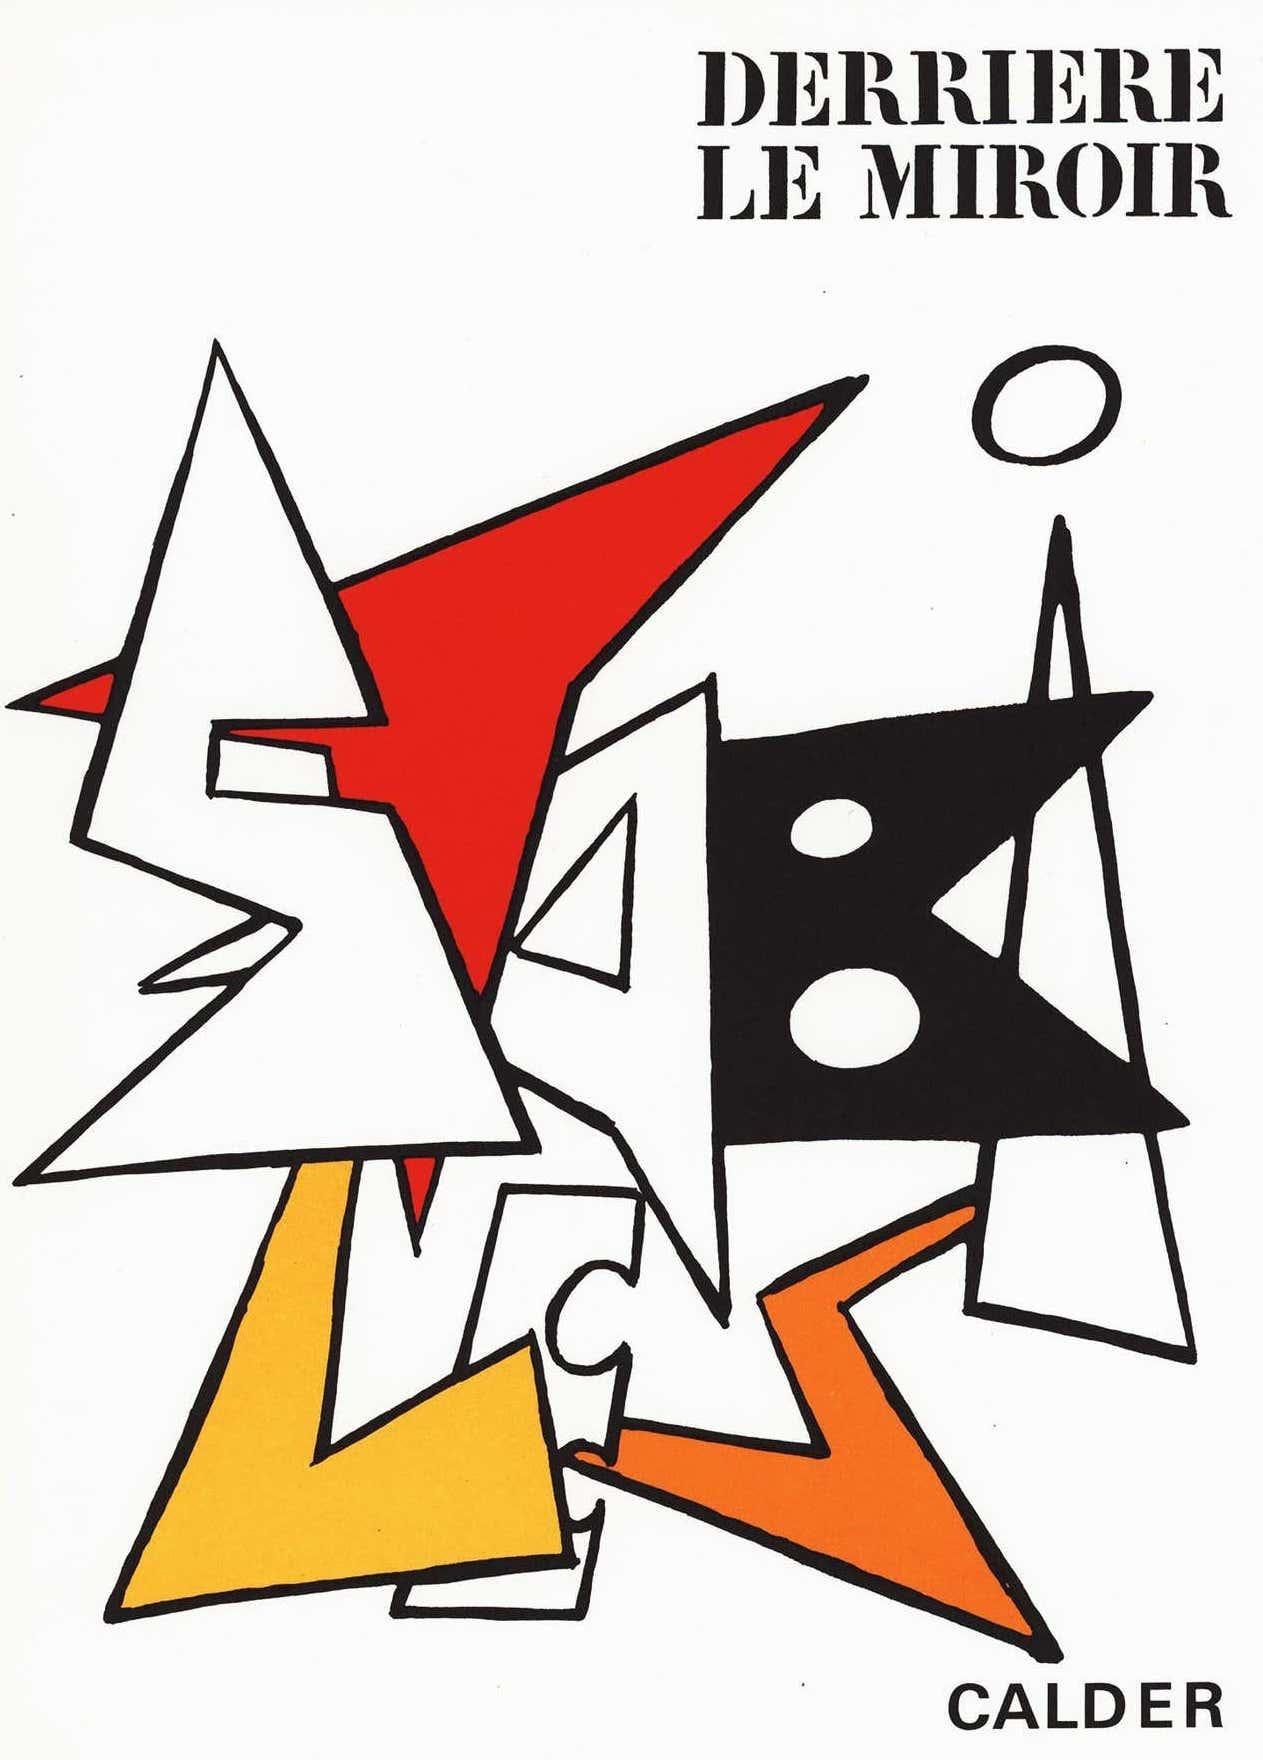 What did Alexander Calder invent?